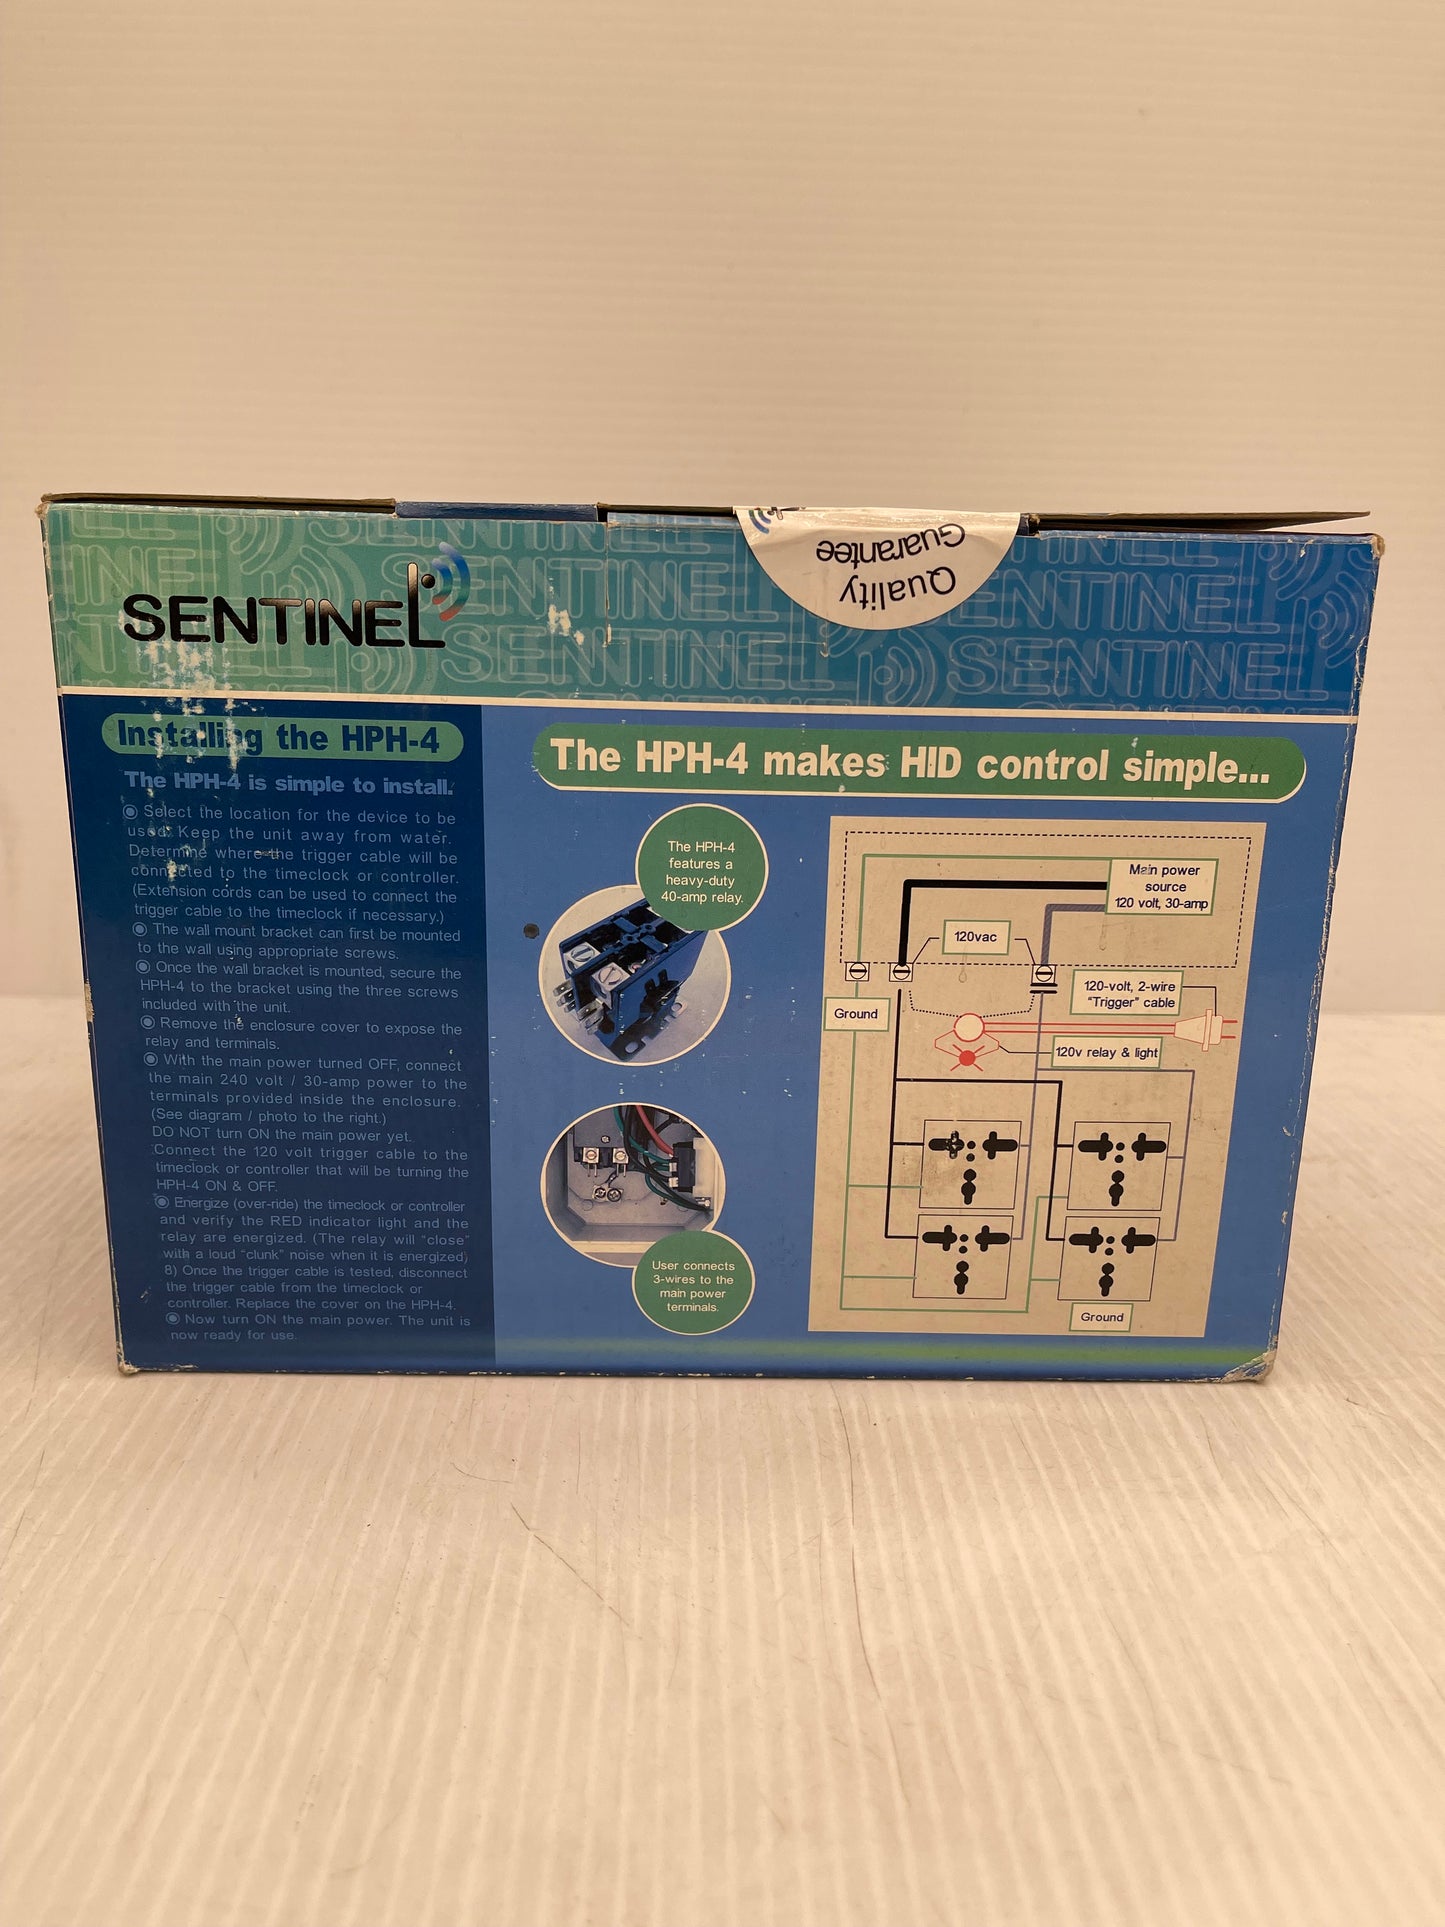 Sentinel HPH-4 Lighting Timer